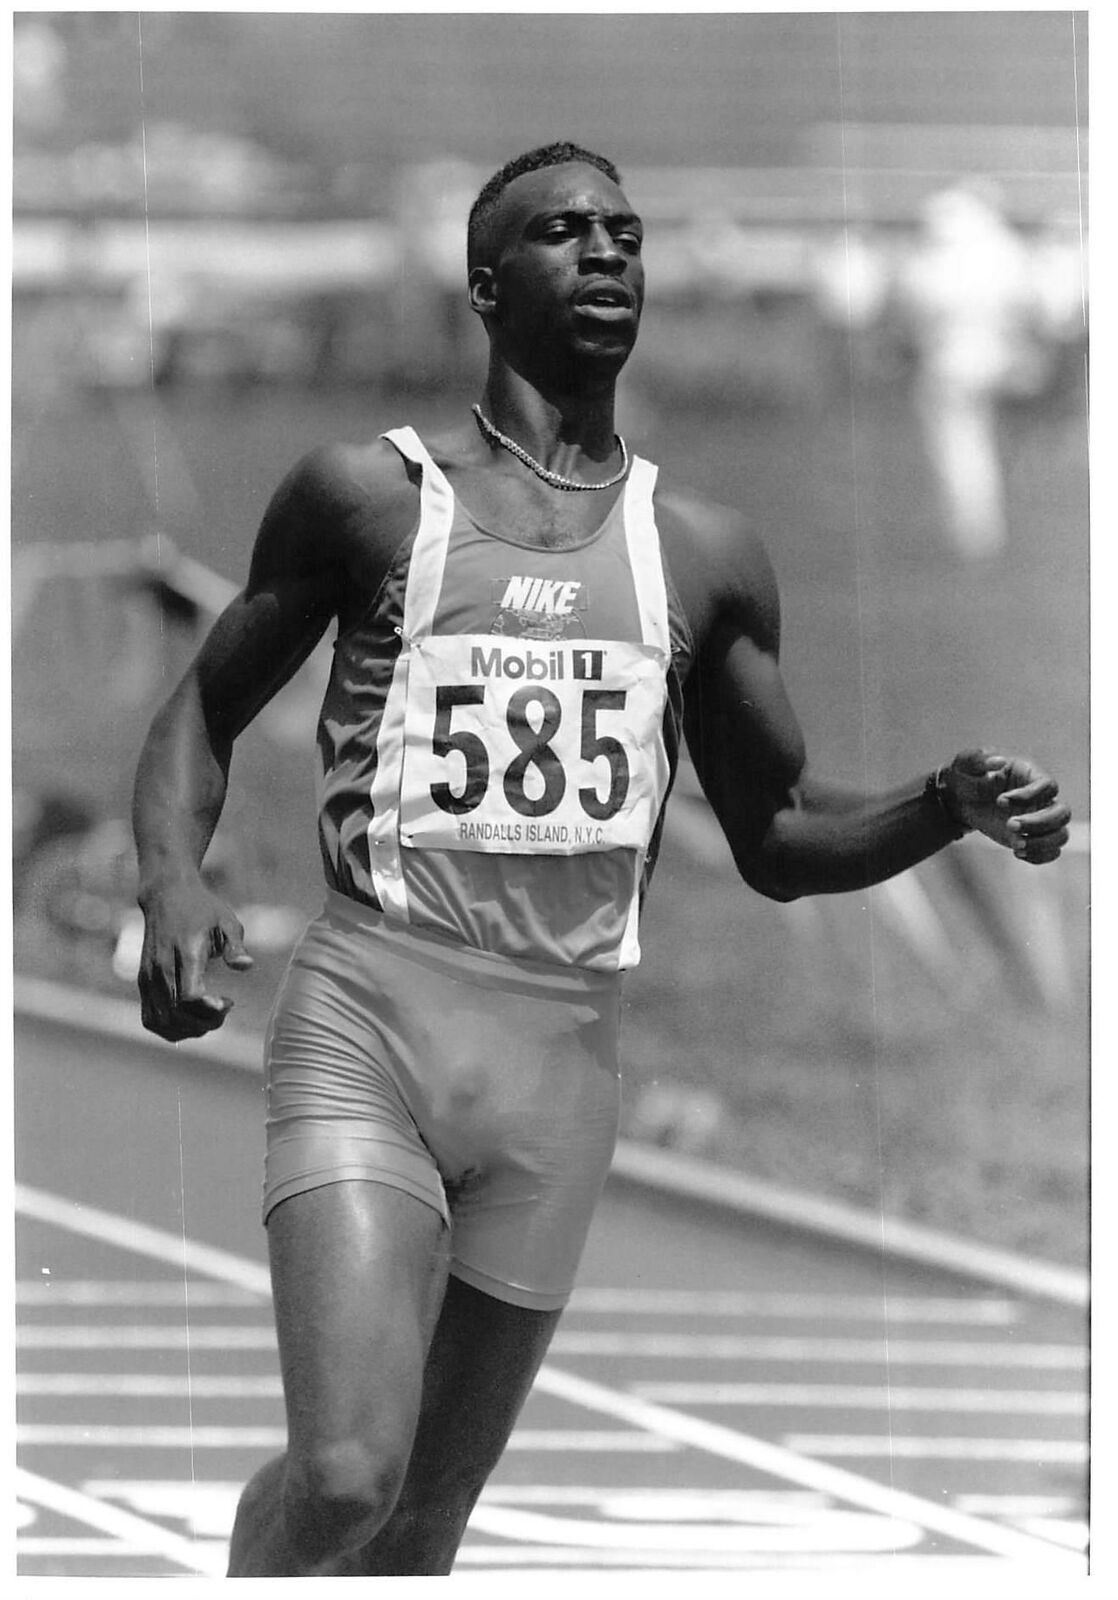 1991 Press Photo MICHAEL JOHNSON 200 meter dash race winner Track & Field Champ